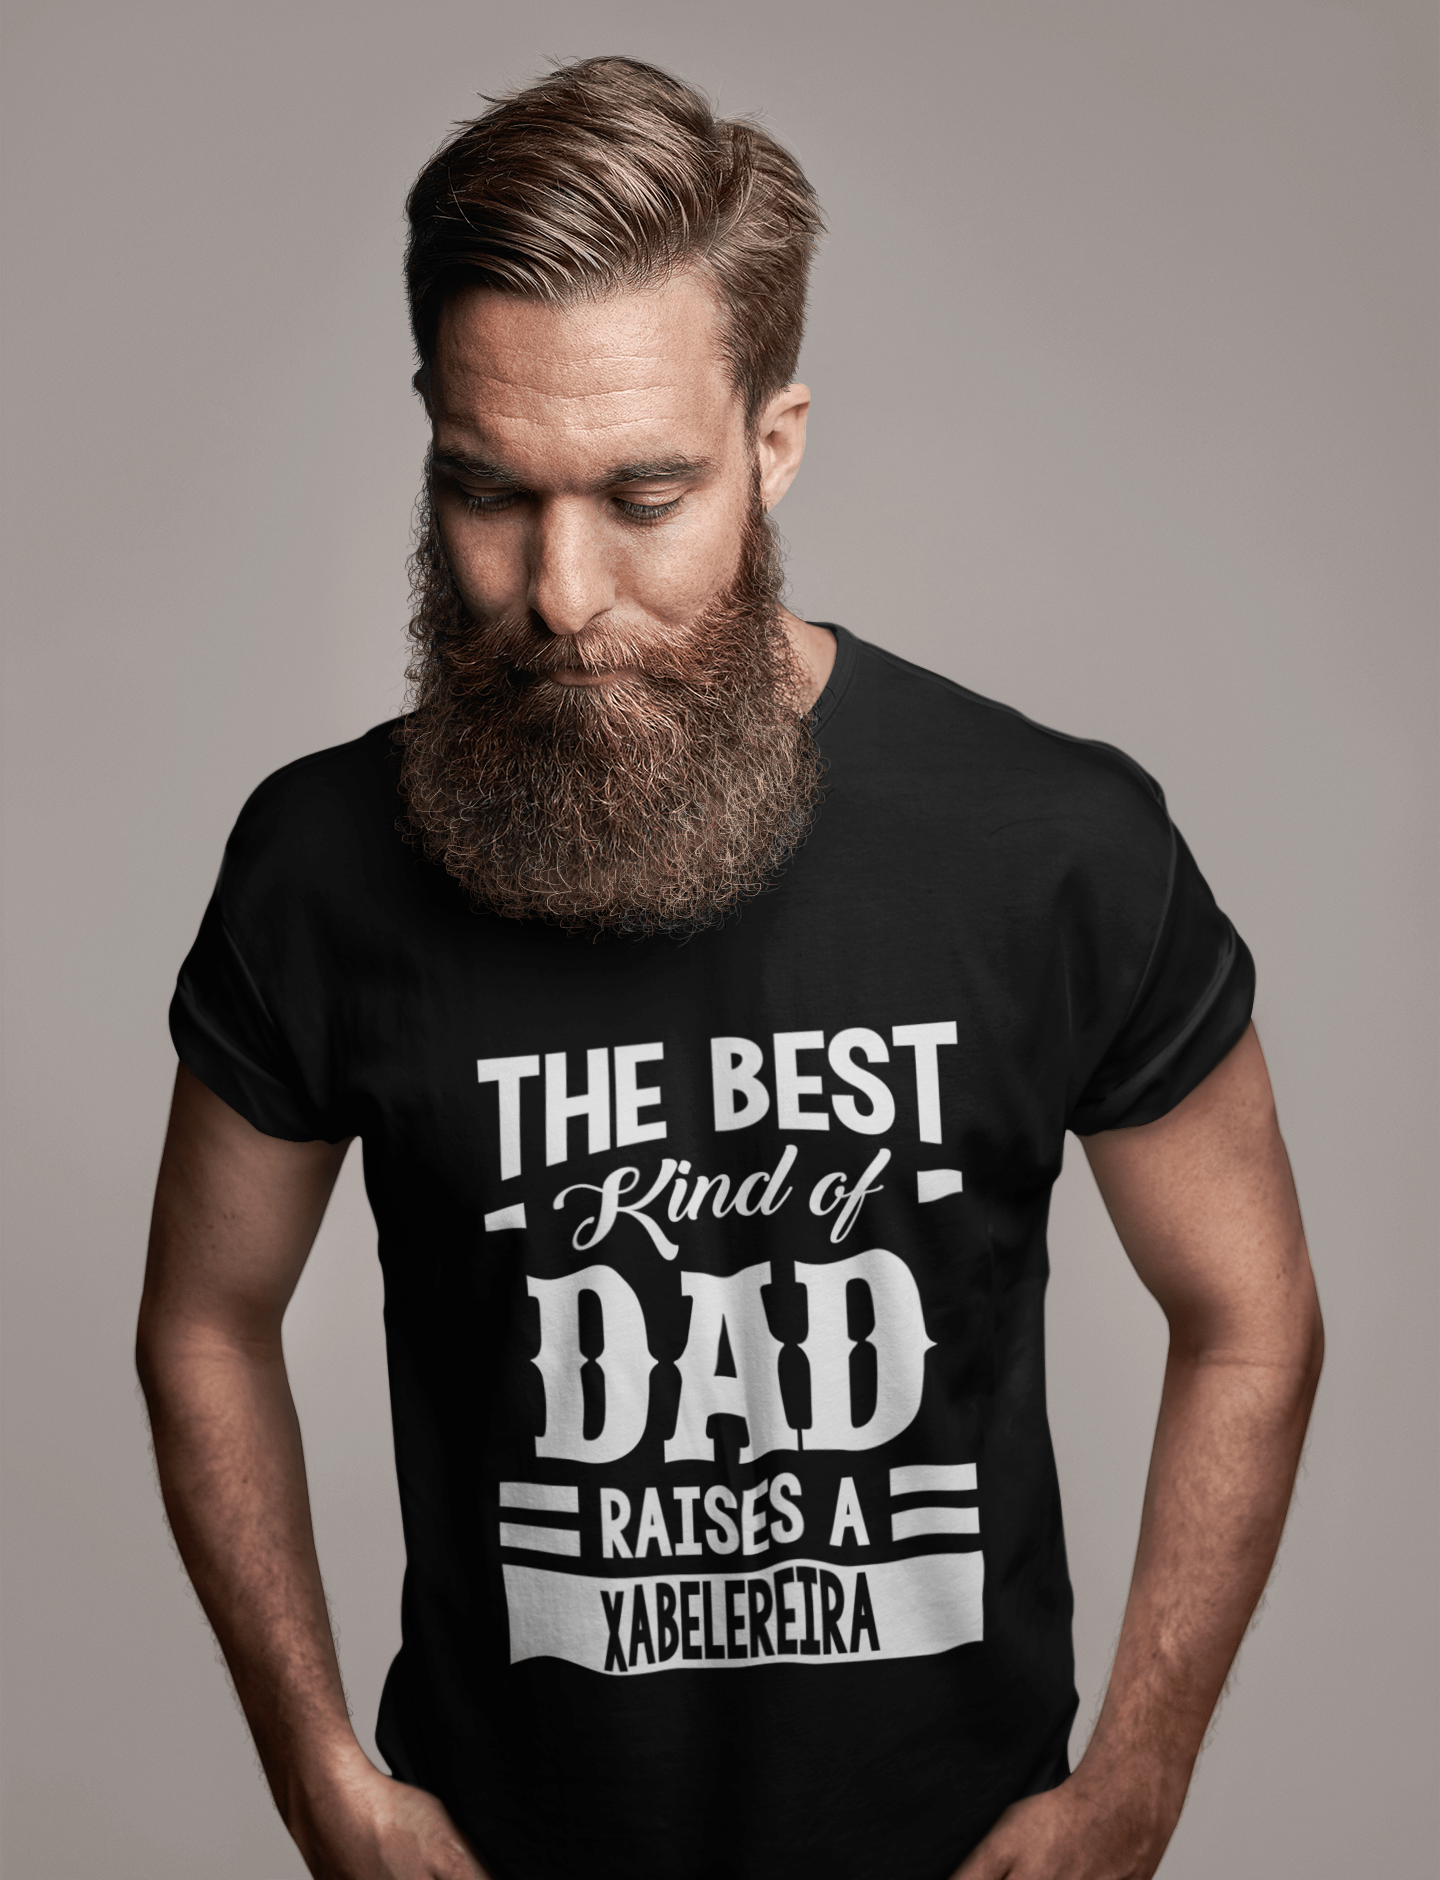 ULTRABASIC Men's Graphic T-Shirt Dad Raises a Xabelereira